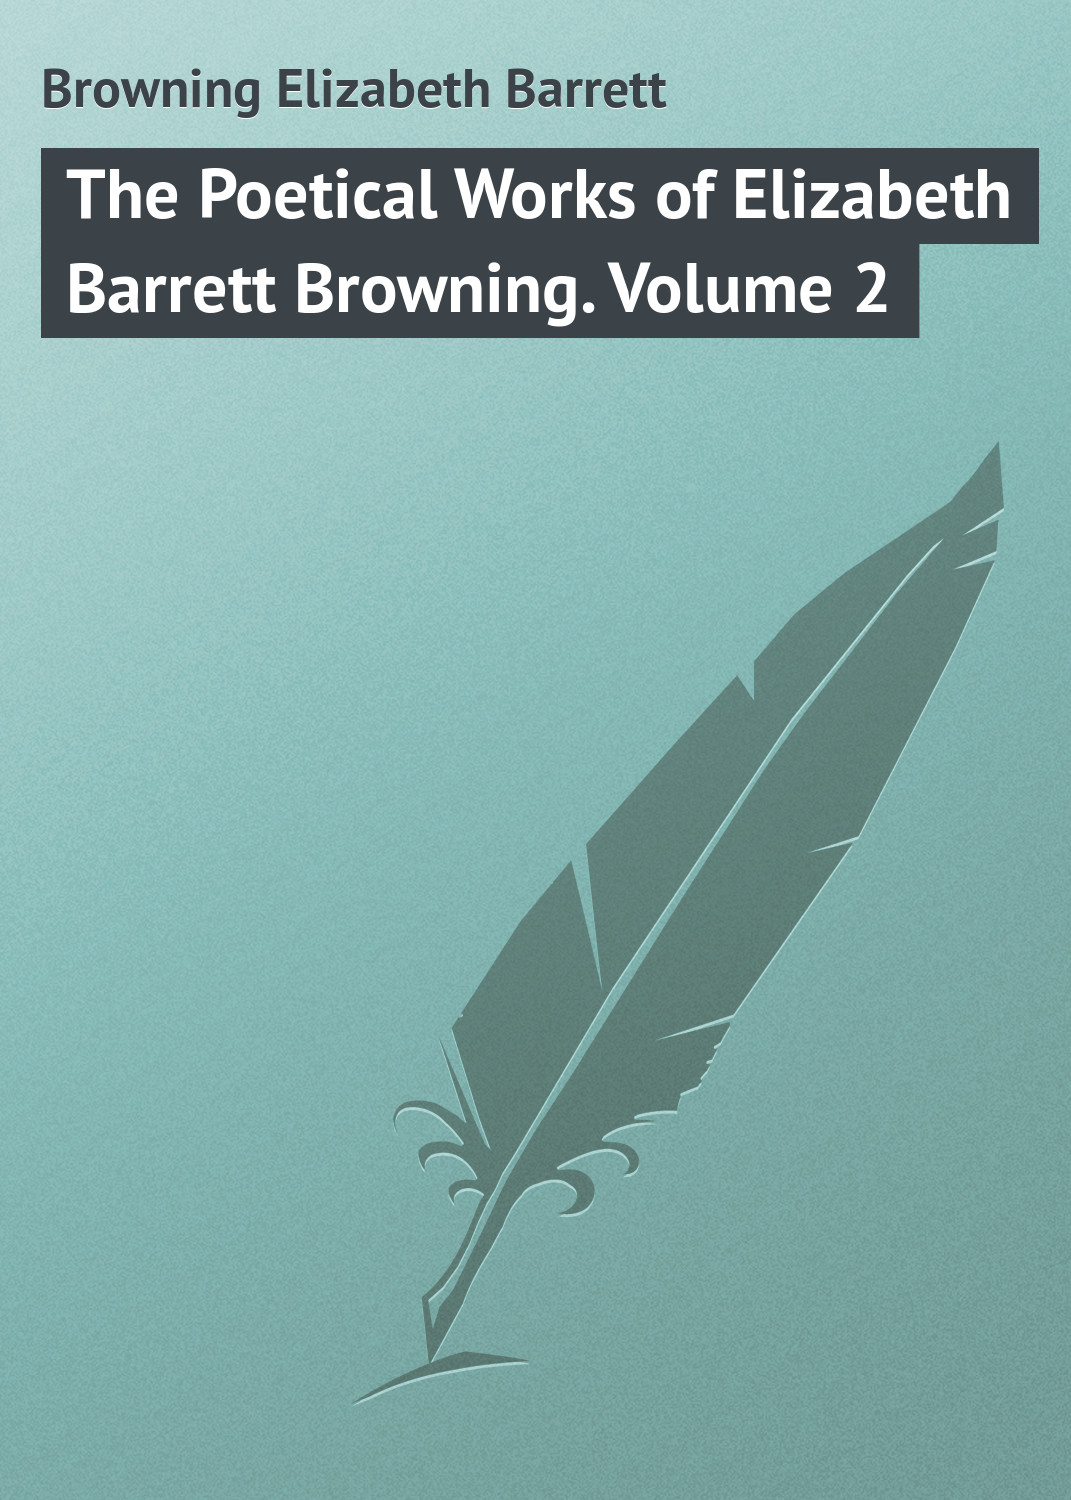 Browning Elizabeth Barrett The Poetical Works of Elizabeth Barrett Browning. Volume 2